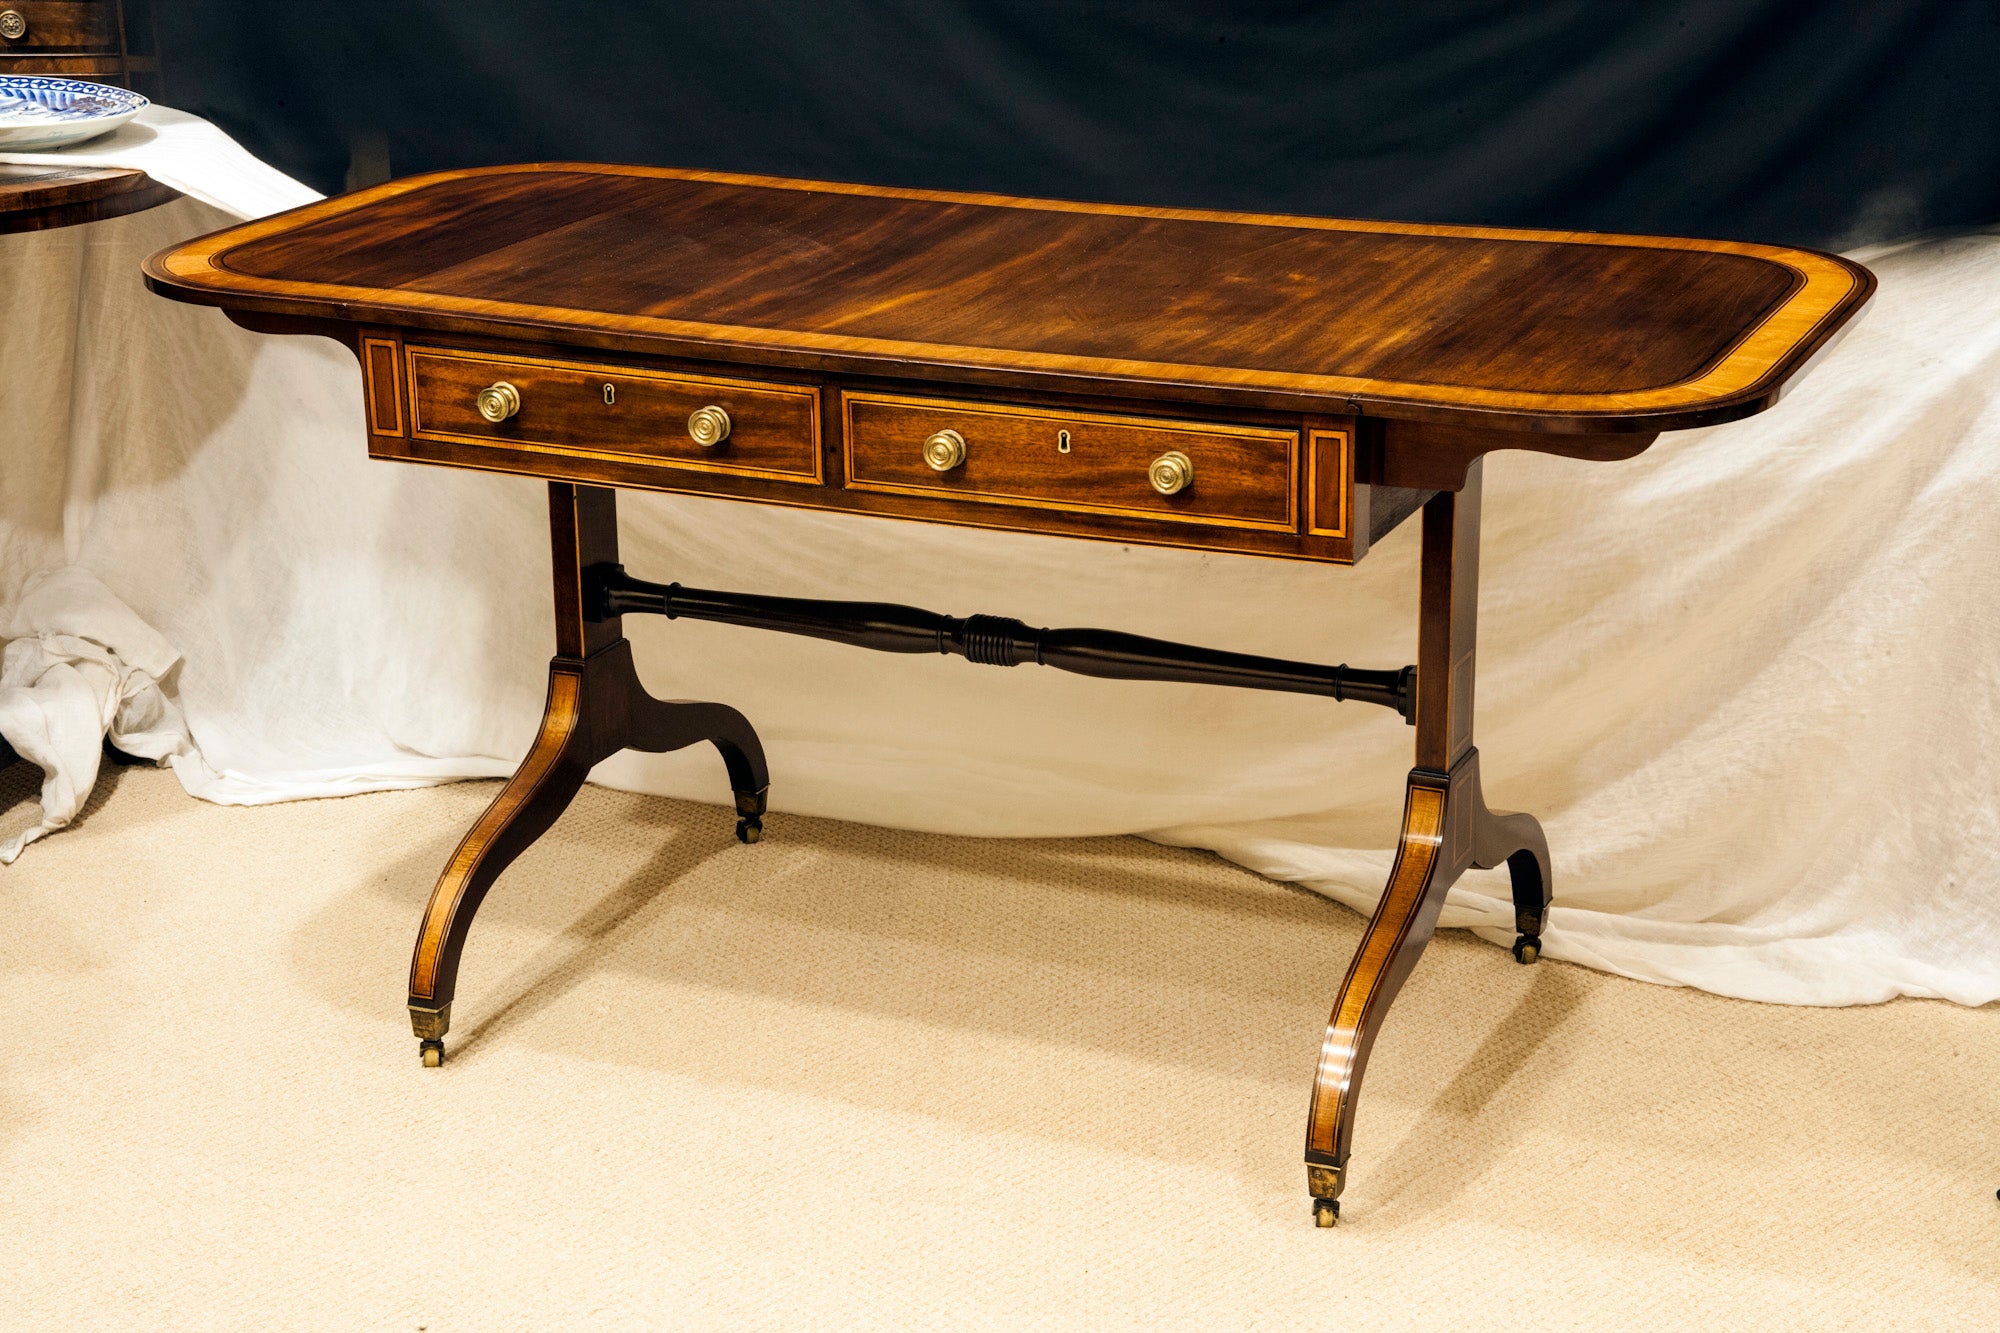 Sheraton Period Mahogany Sofa Table Inlaid in Harewood and Ebony Stringing For Sale